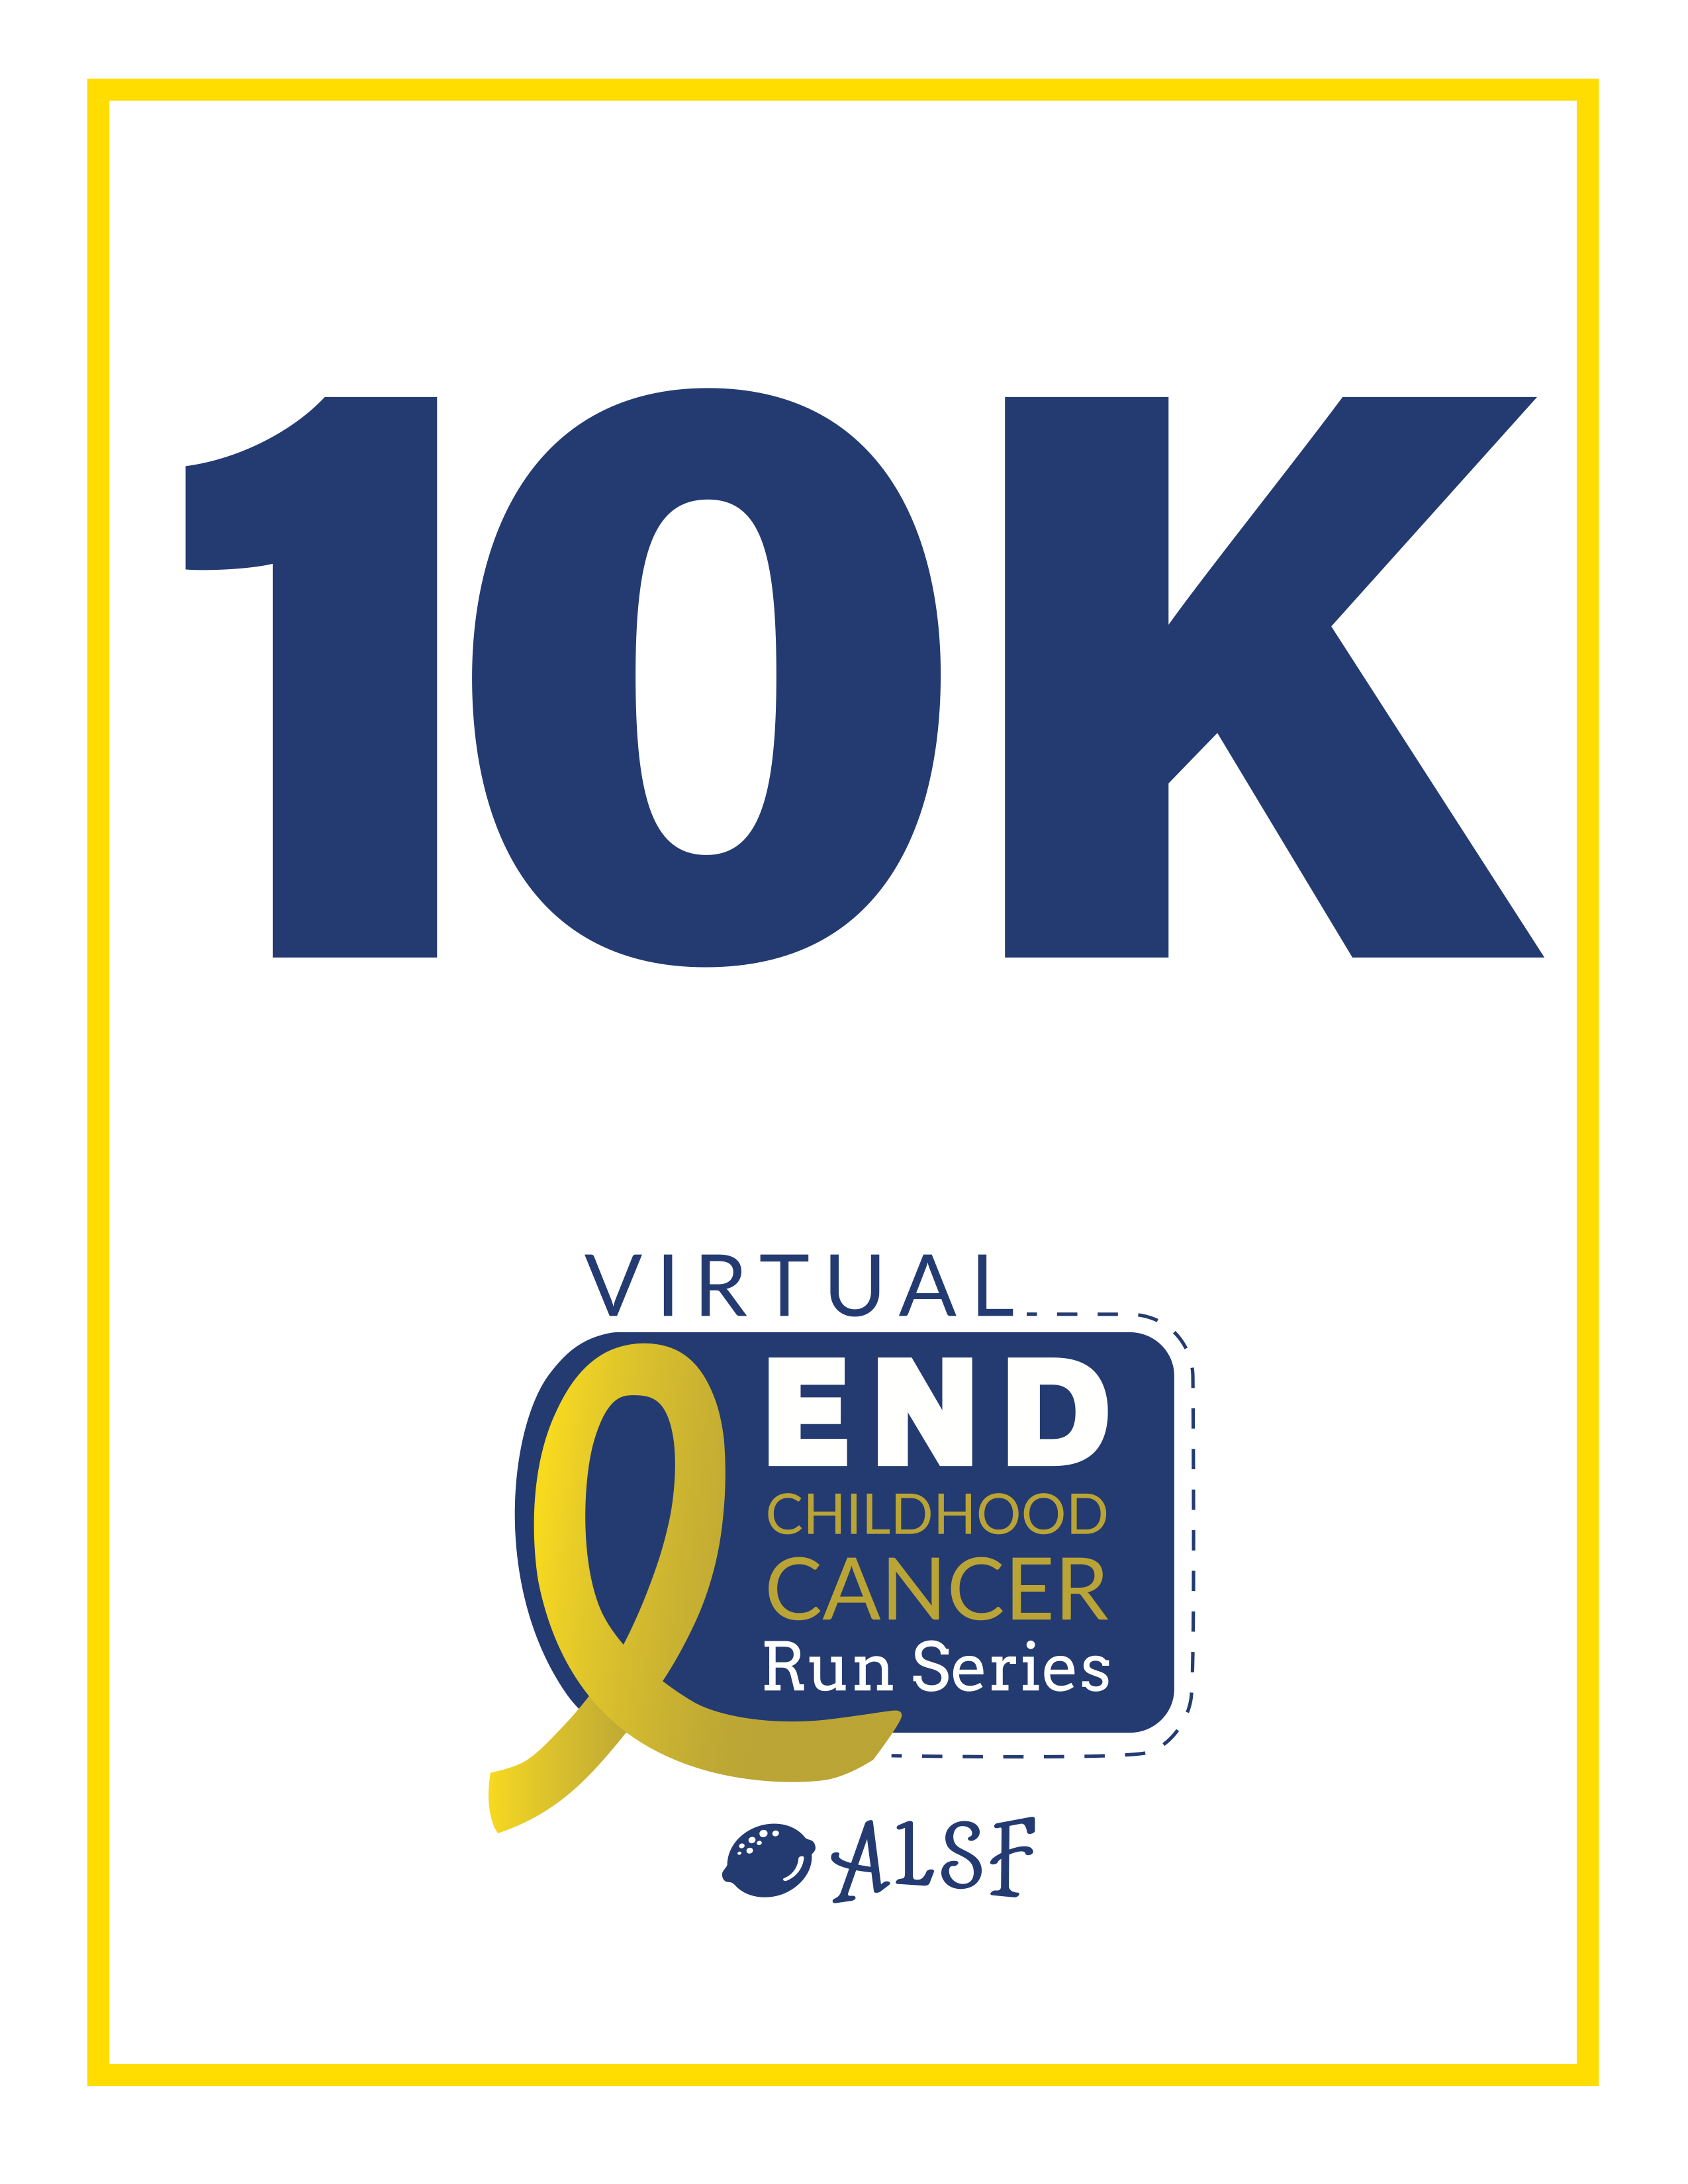 Virtual End Childhood Cancer Run Series Mile Marker - 10K